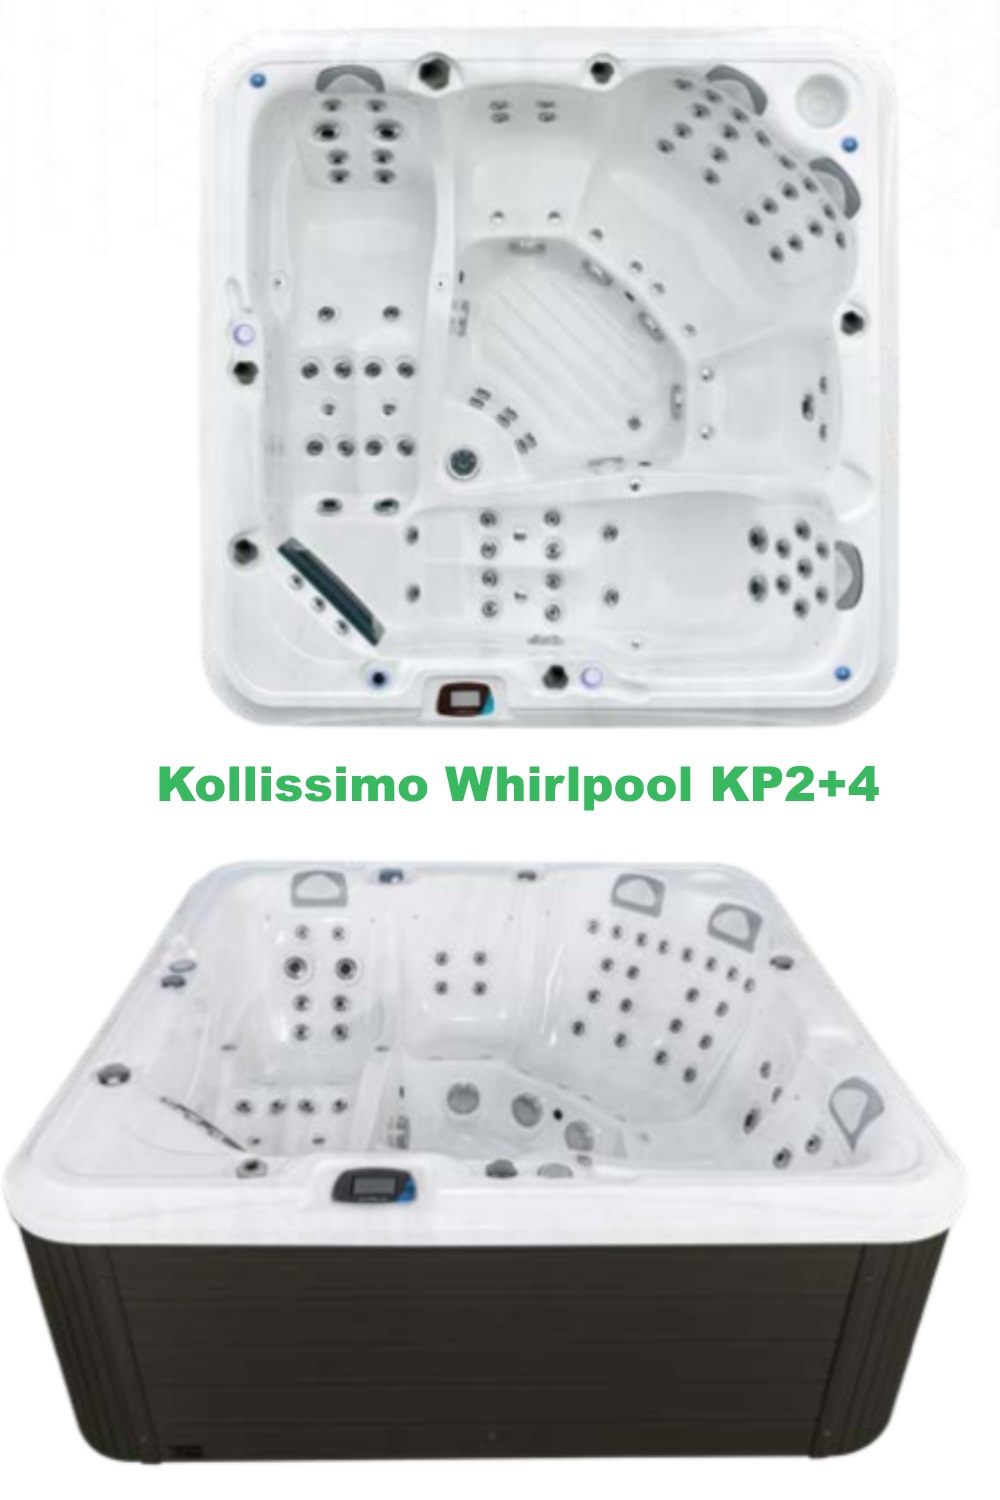 Kollissimo Whirlpool KP2+4